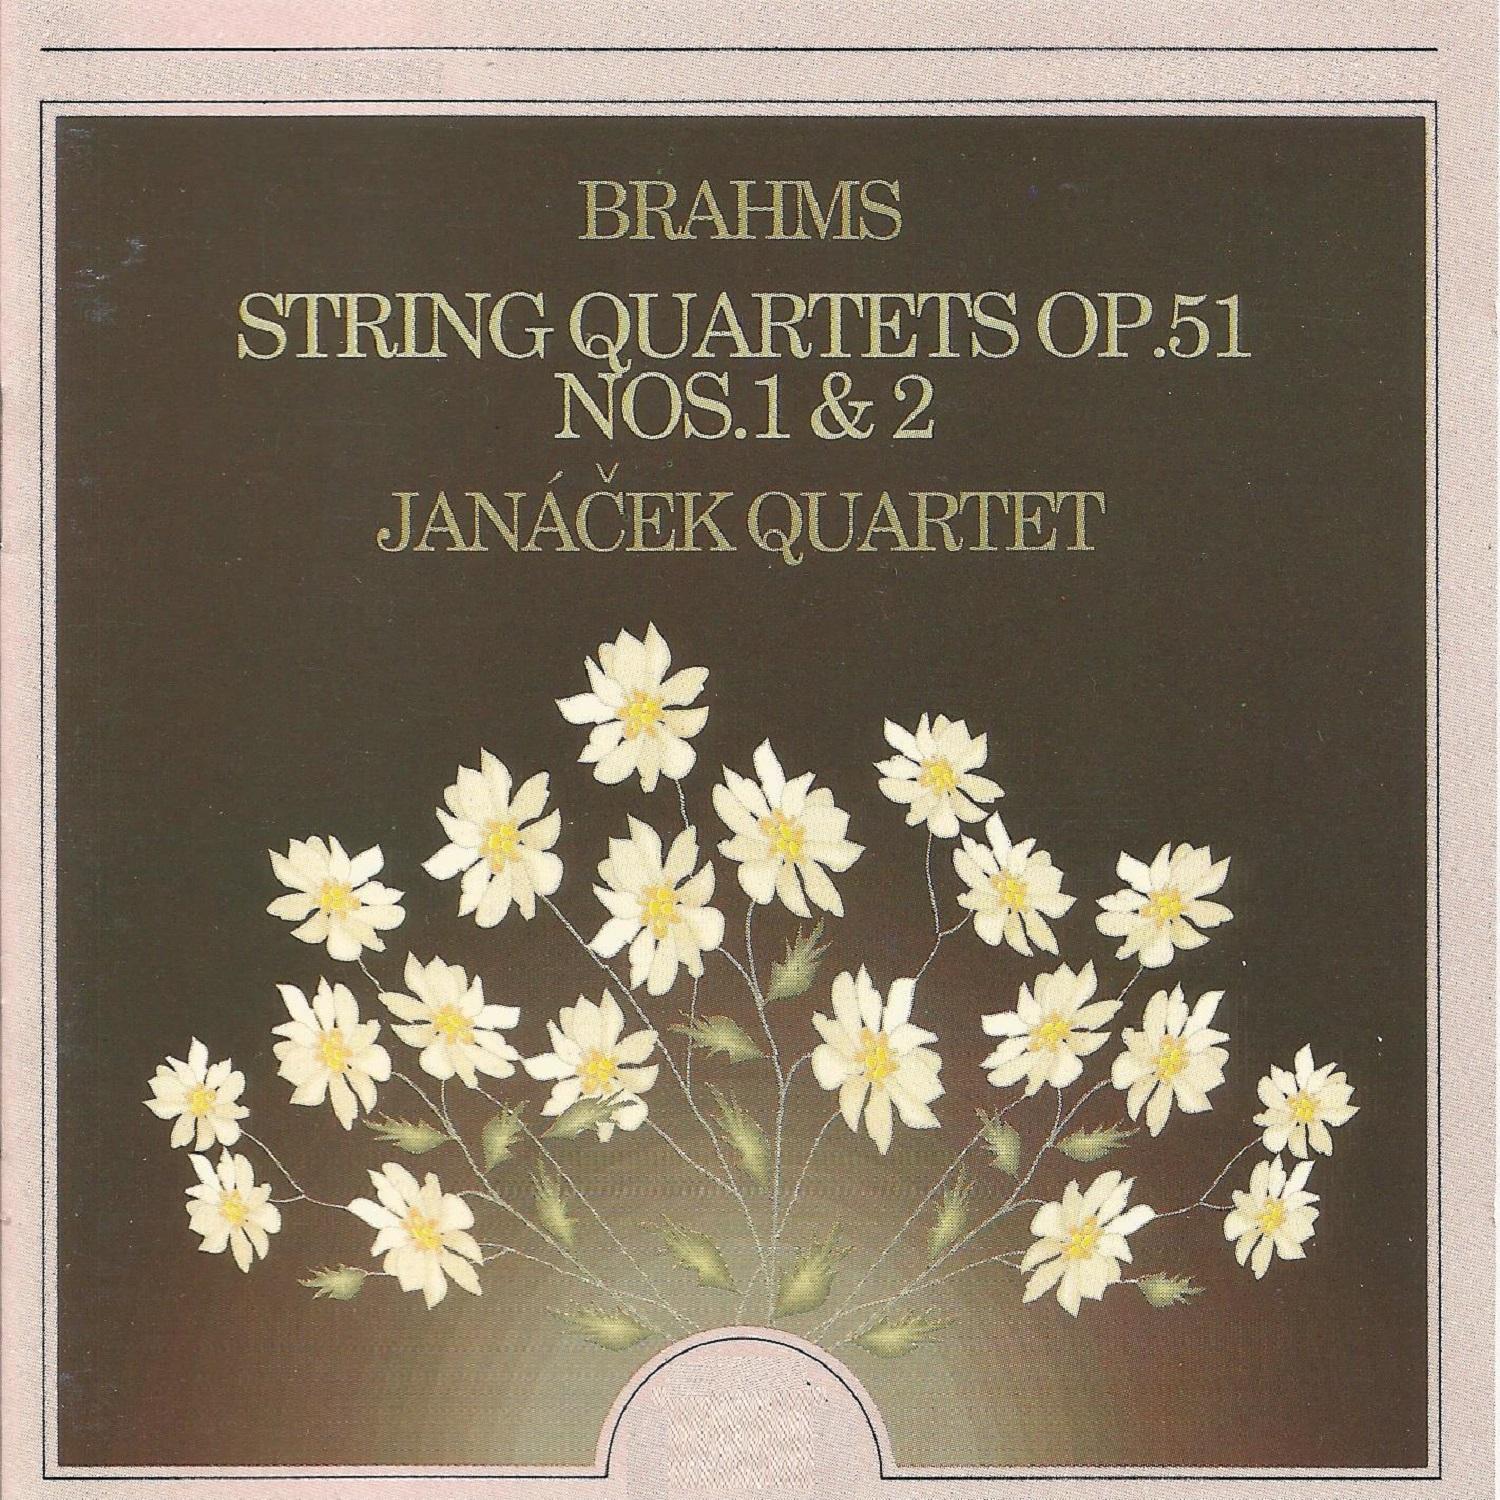 String Quartet No. 1 in C Minor, Op. 51 No. 1: II. Romanze. Poco adagio